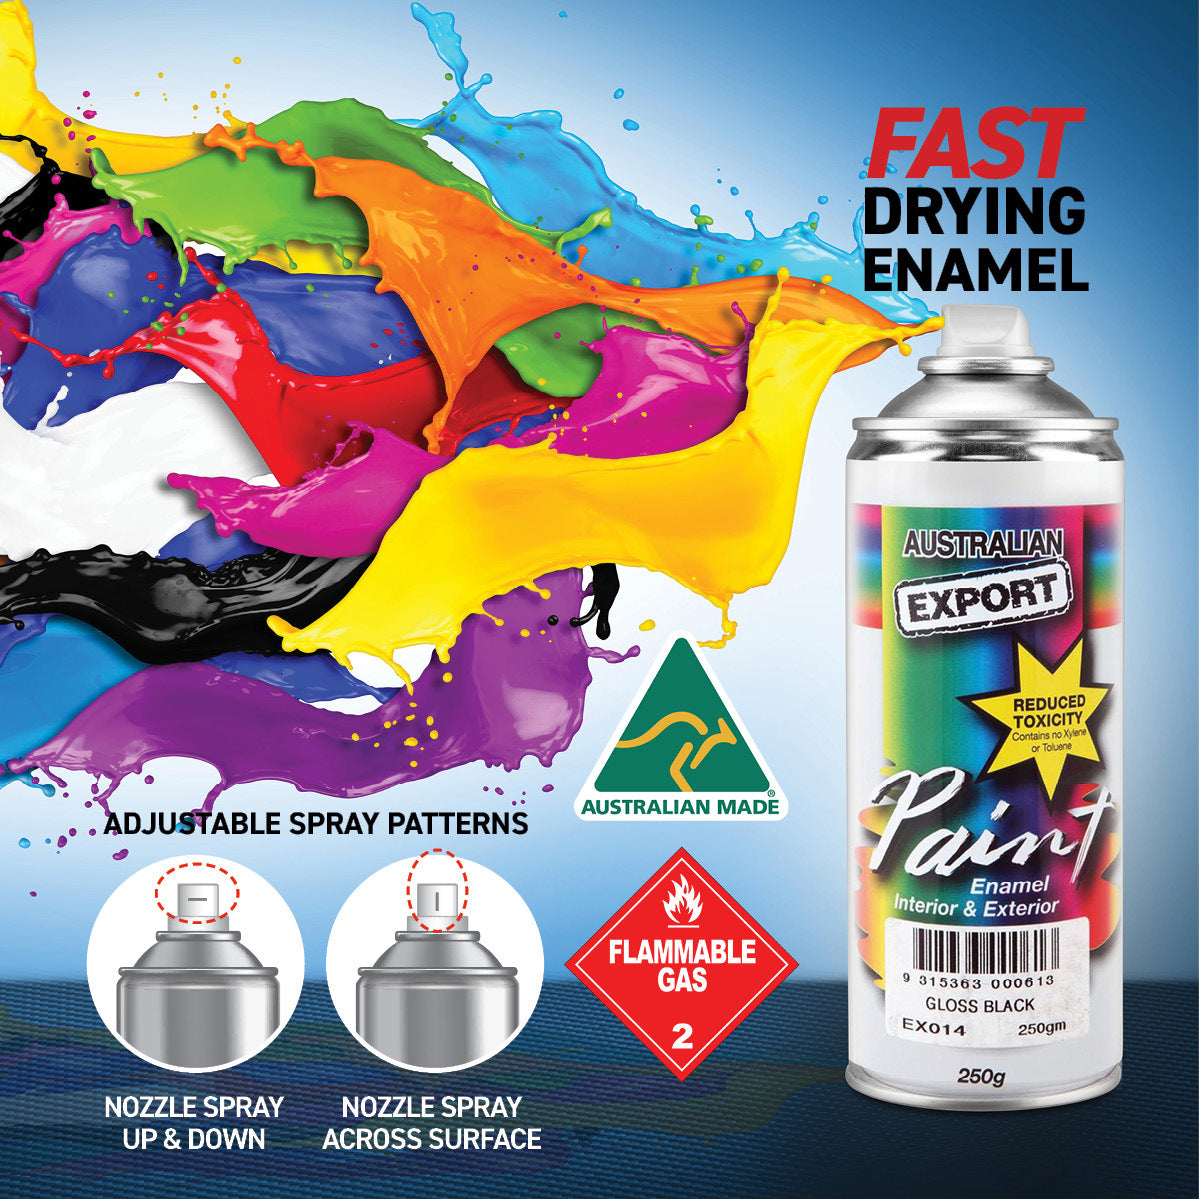 Australian Export 12PK 250gm Aerosol Spray Paint Cans [Colour: Mid Grey]